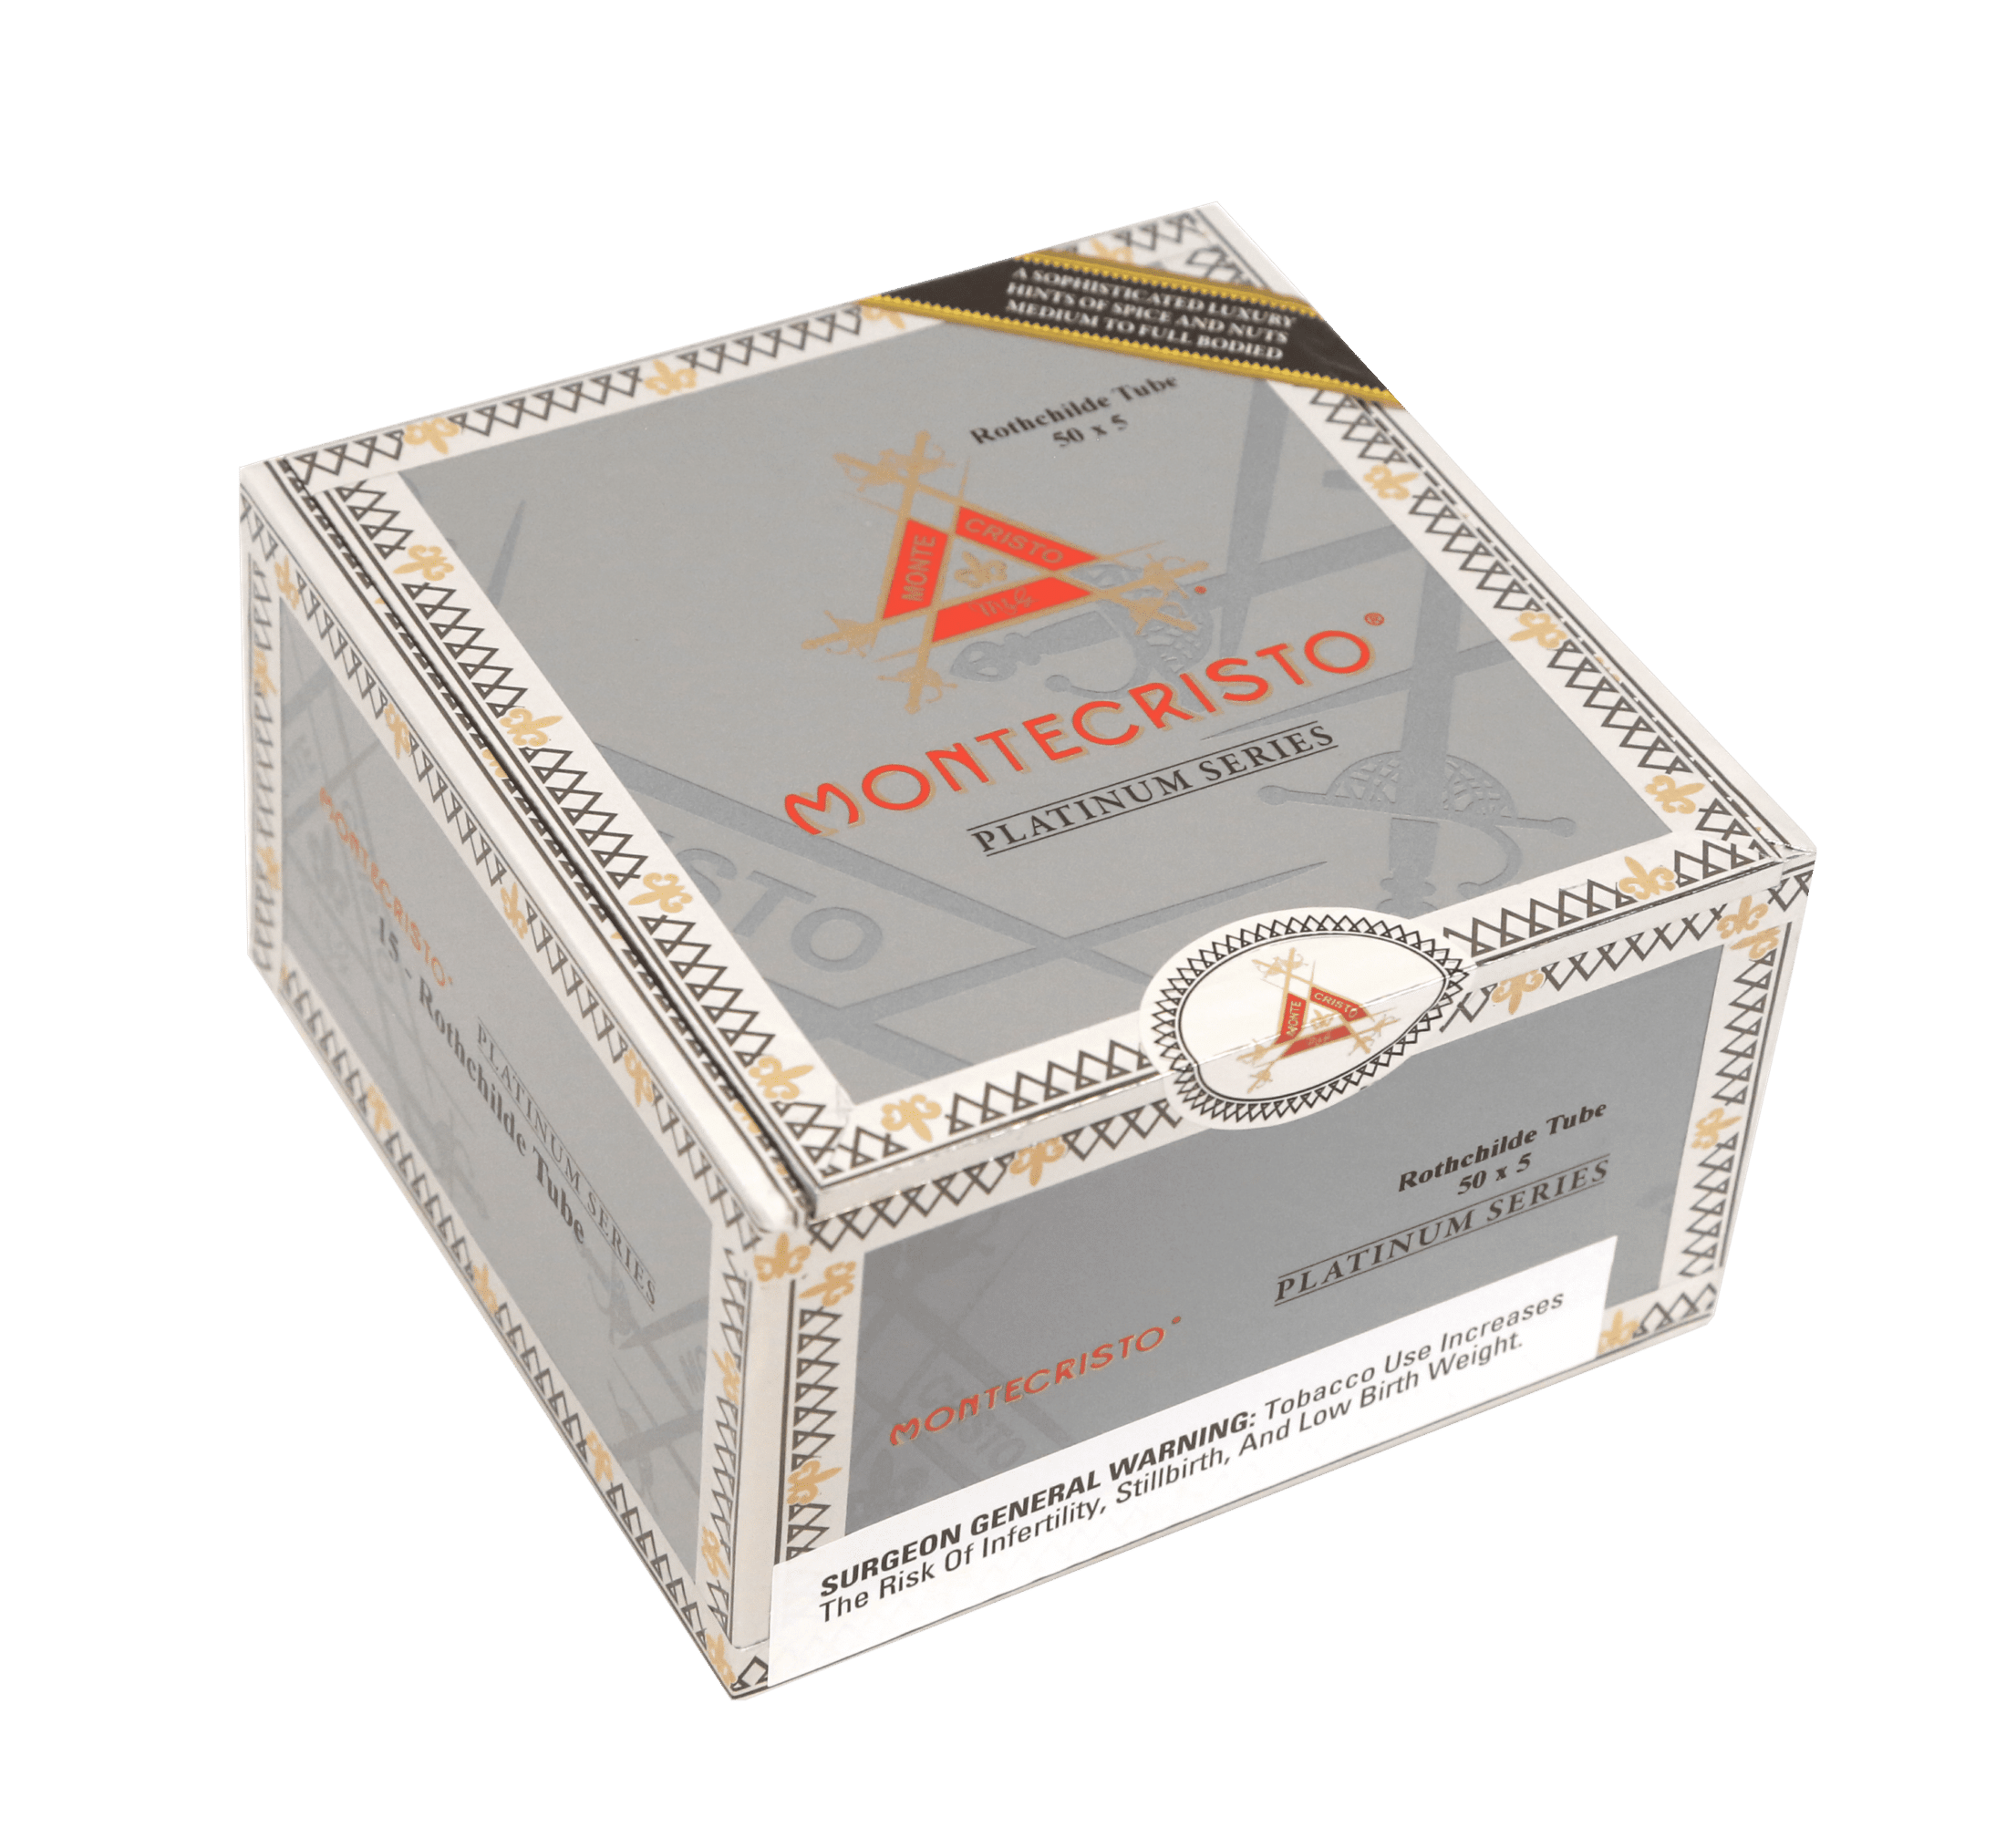 Closed box of 15 count Montecristo Platinum Series Rothchilde Tube cigars